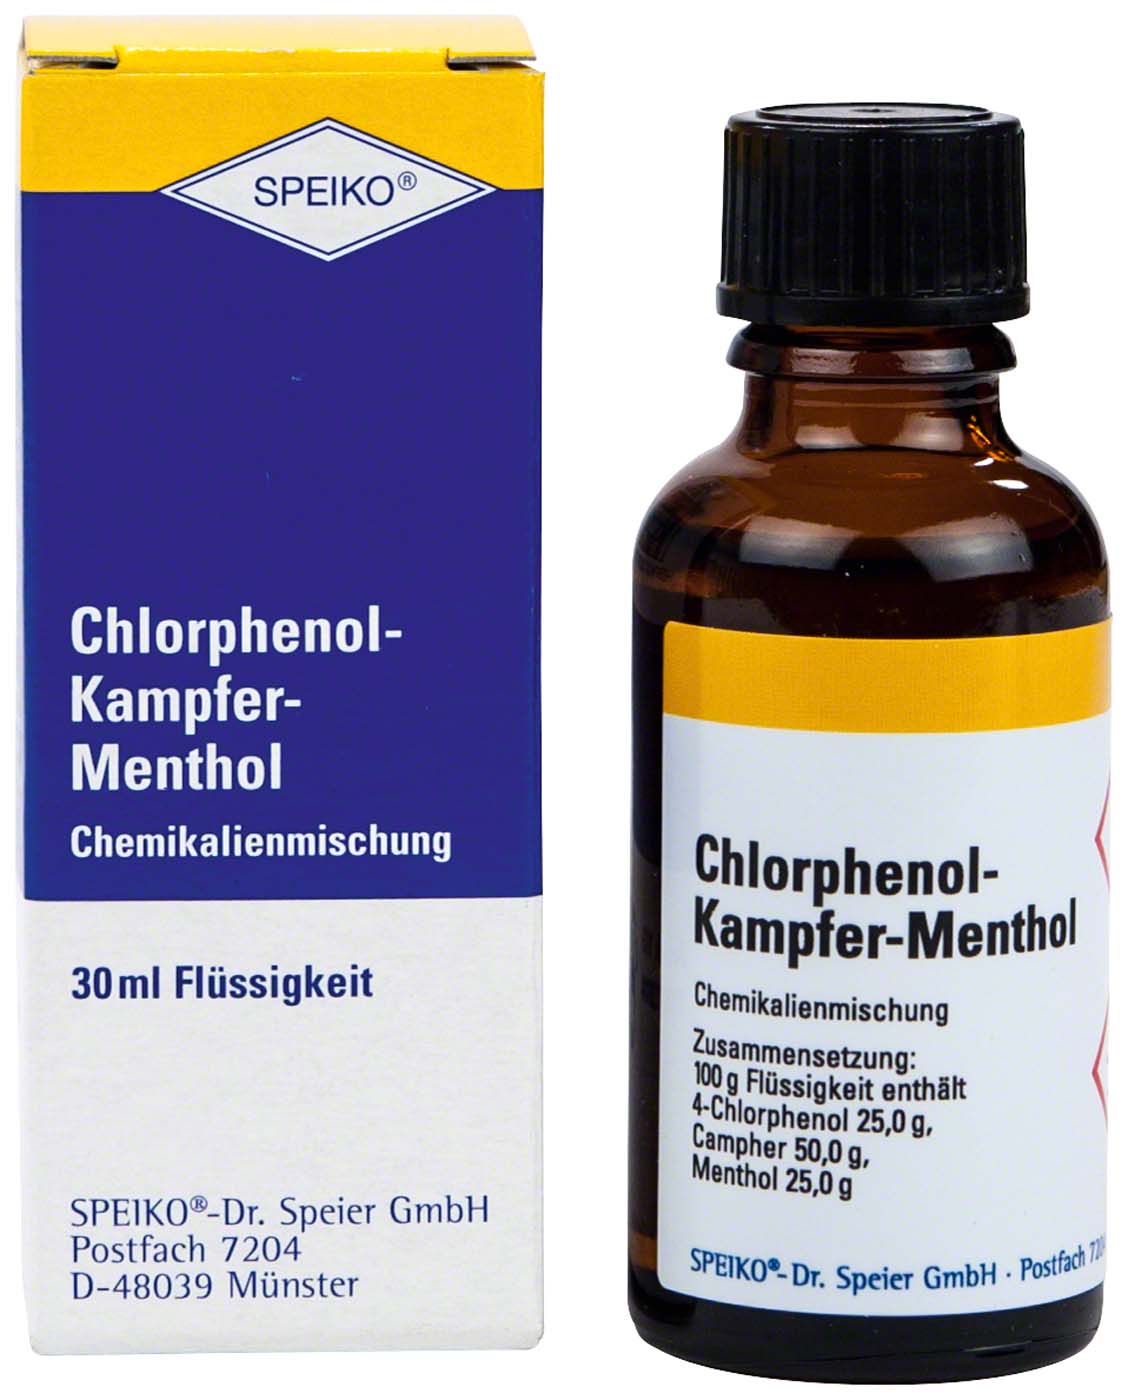 Chlorphenol-Kampfer-Menthol SPEIKO